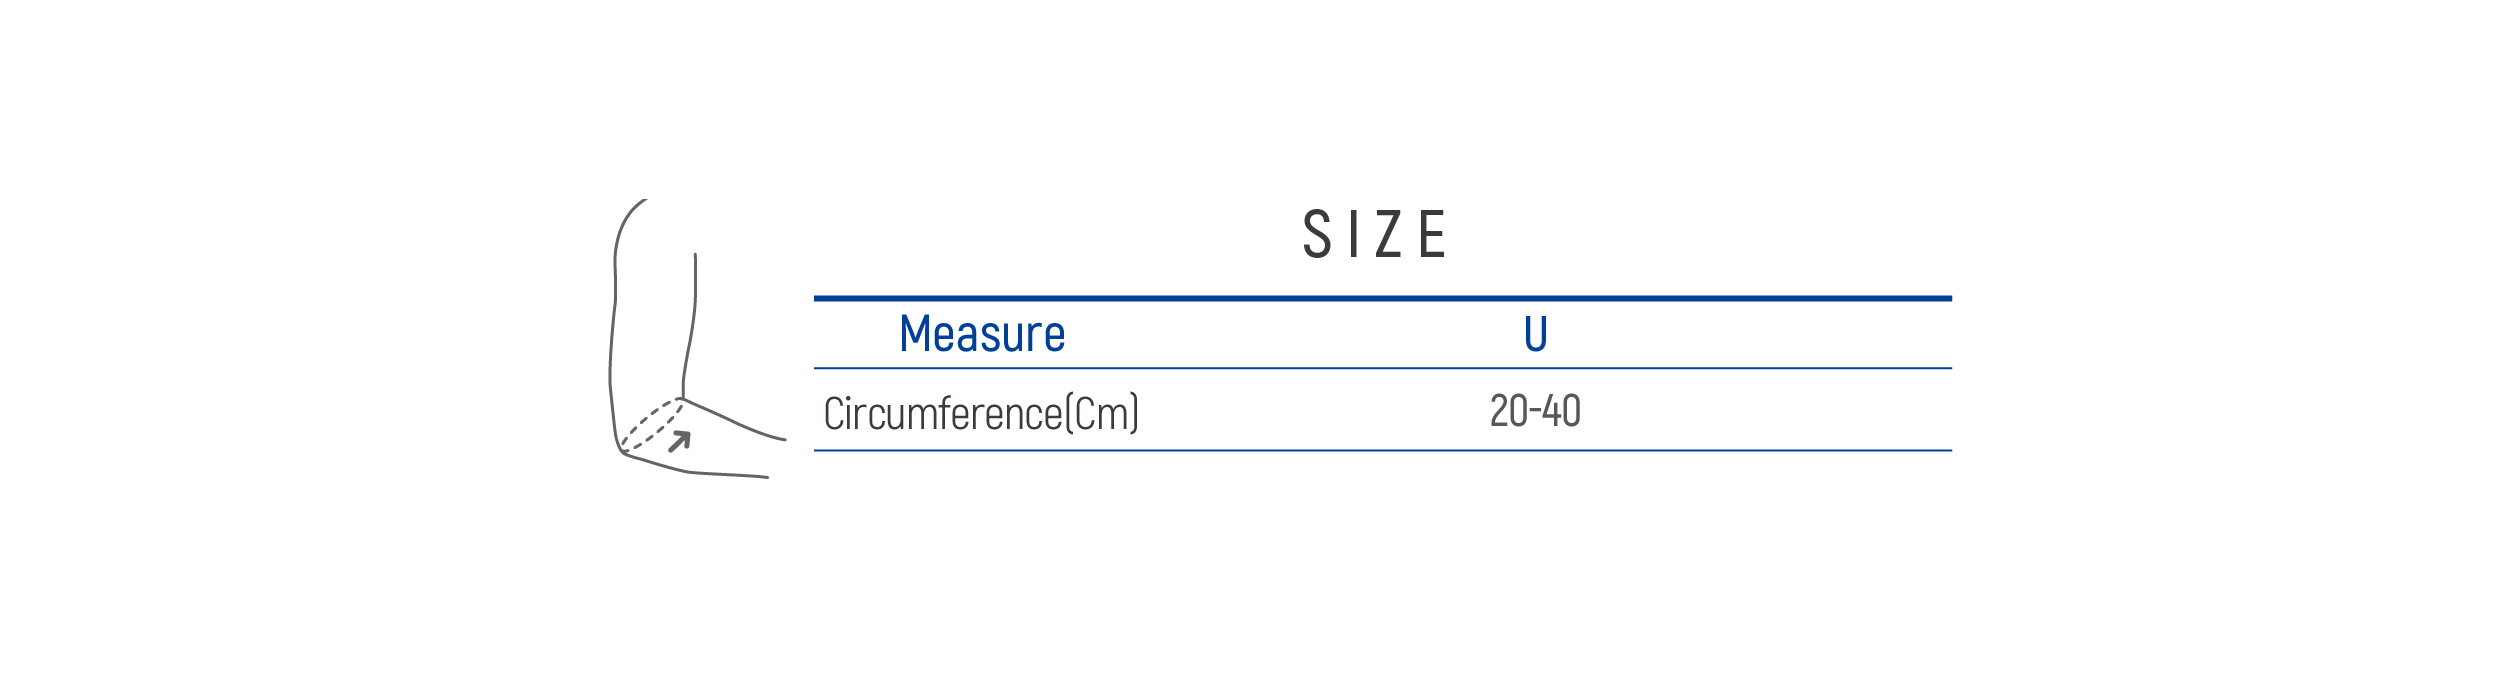 DR-E012 Size table image